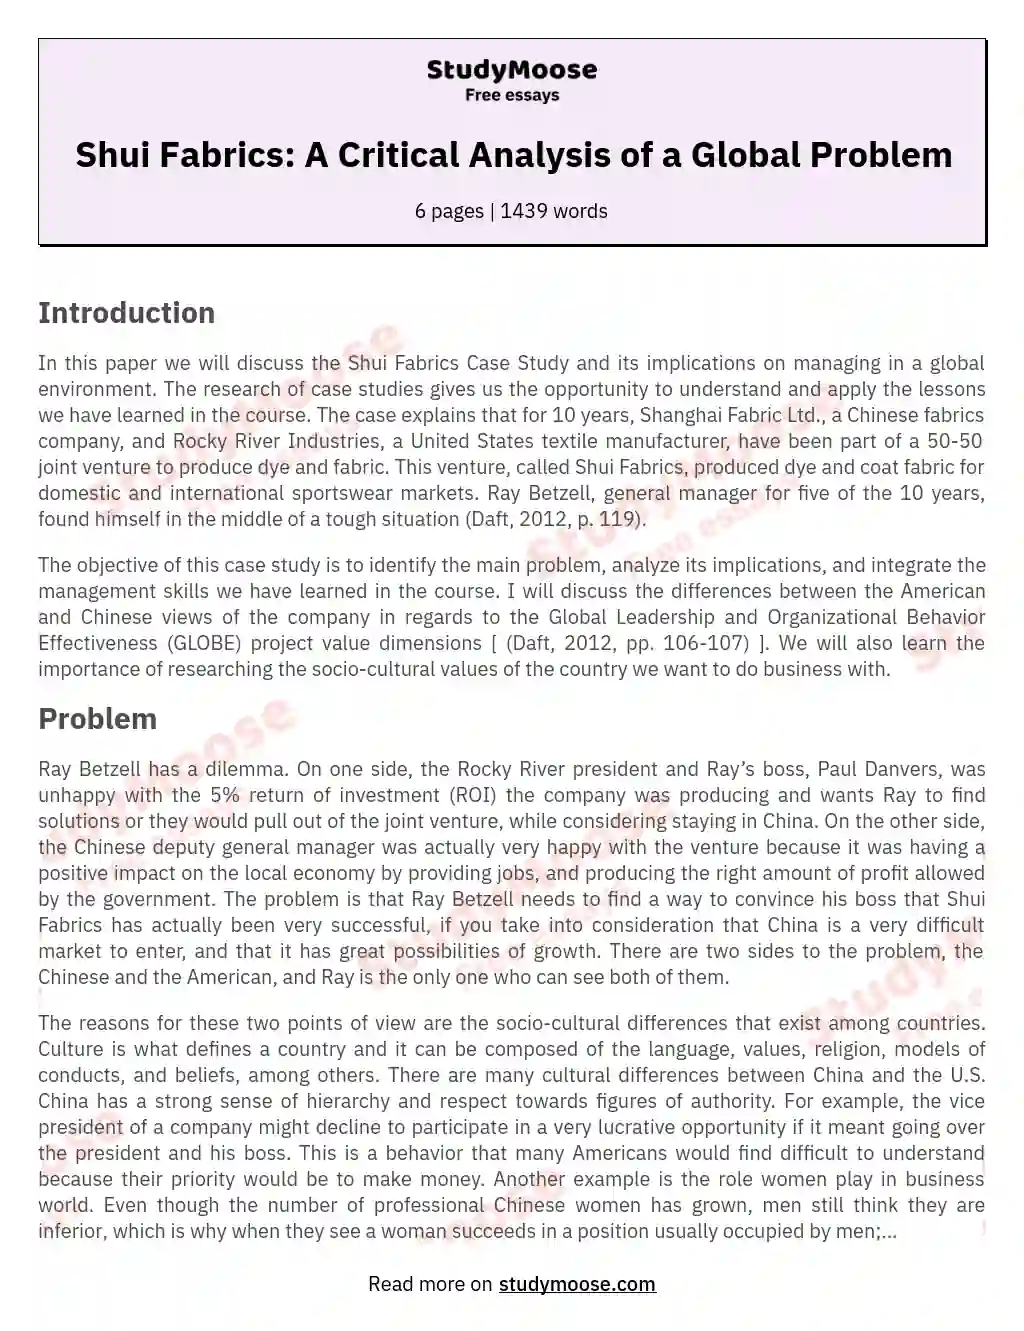 Shui Fabrics: A Critical Analysis of a Global Problem essay